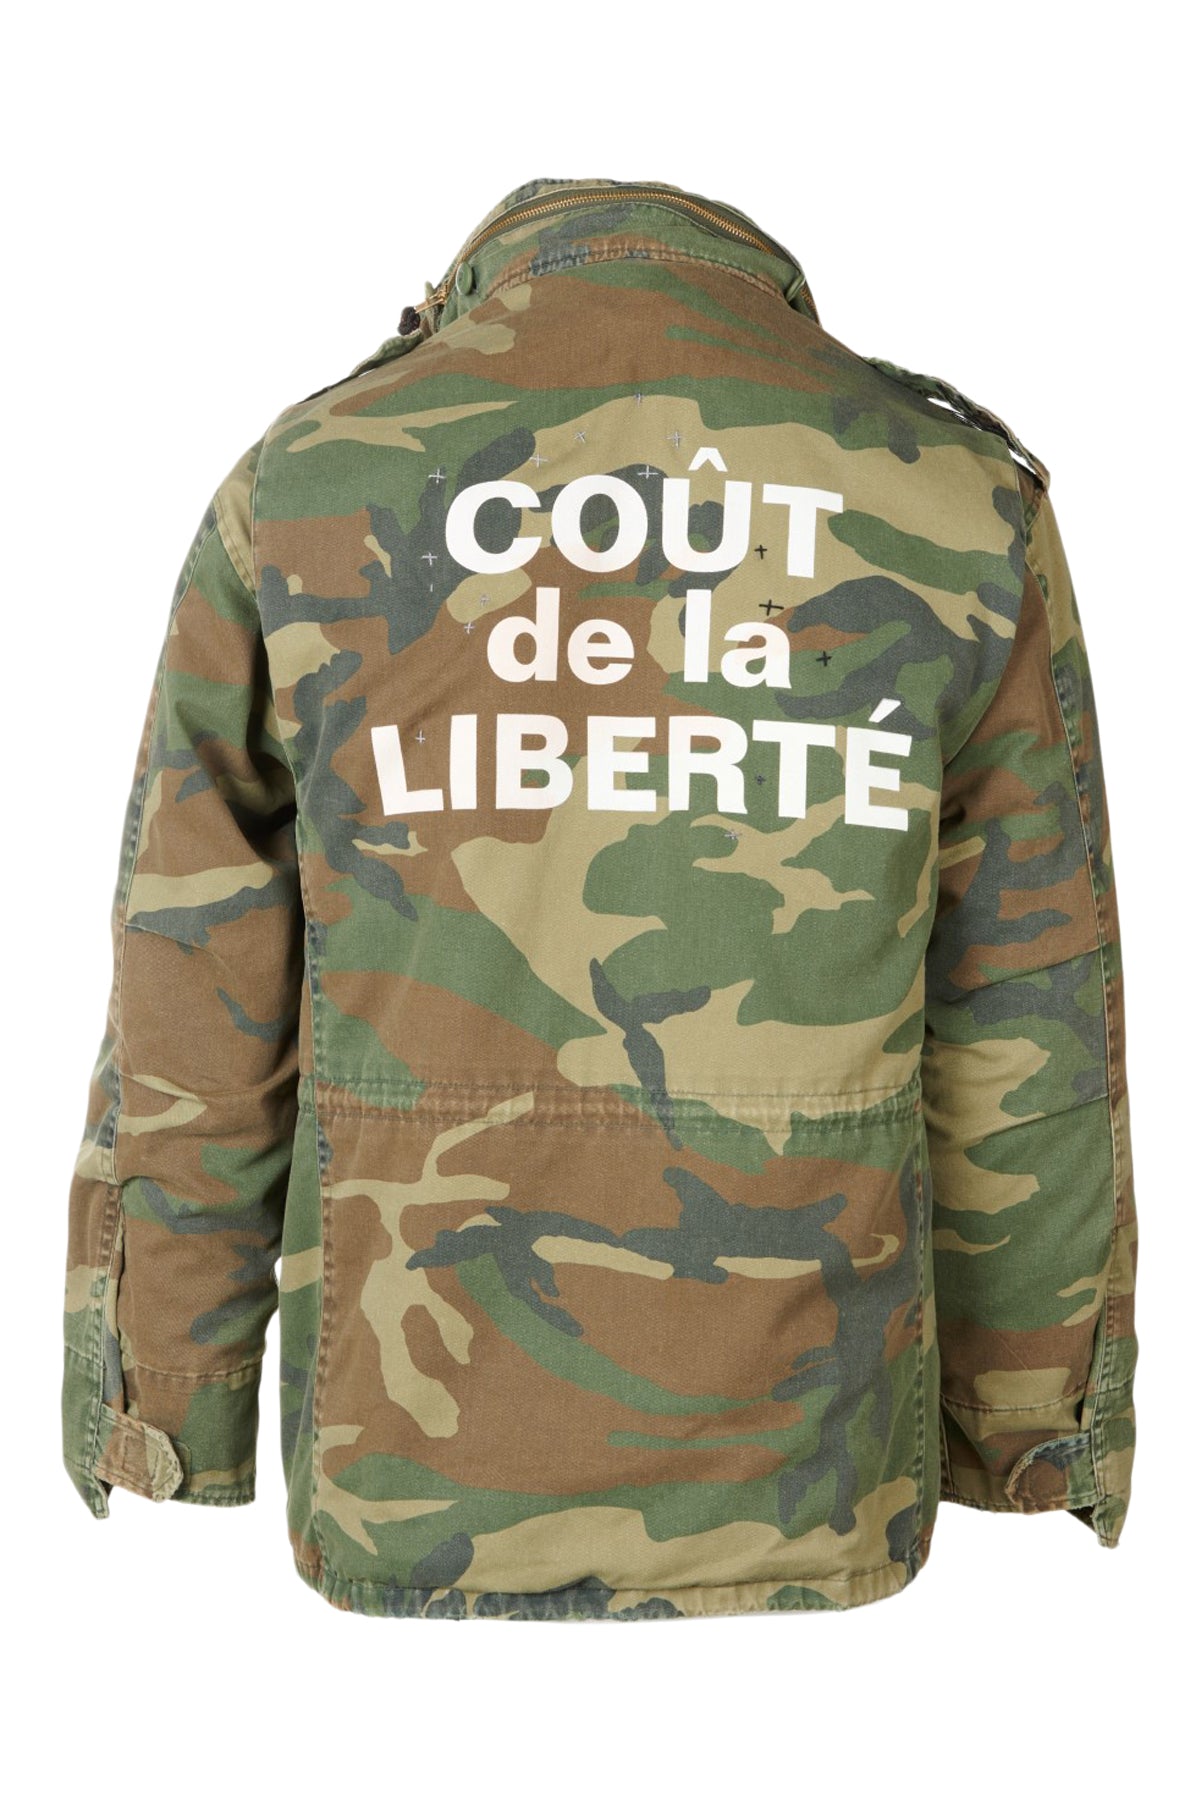 Travis/Cotton Camo Vintage Military Jacket